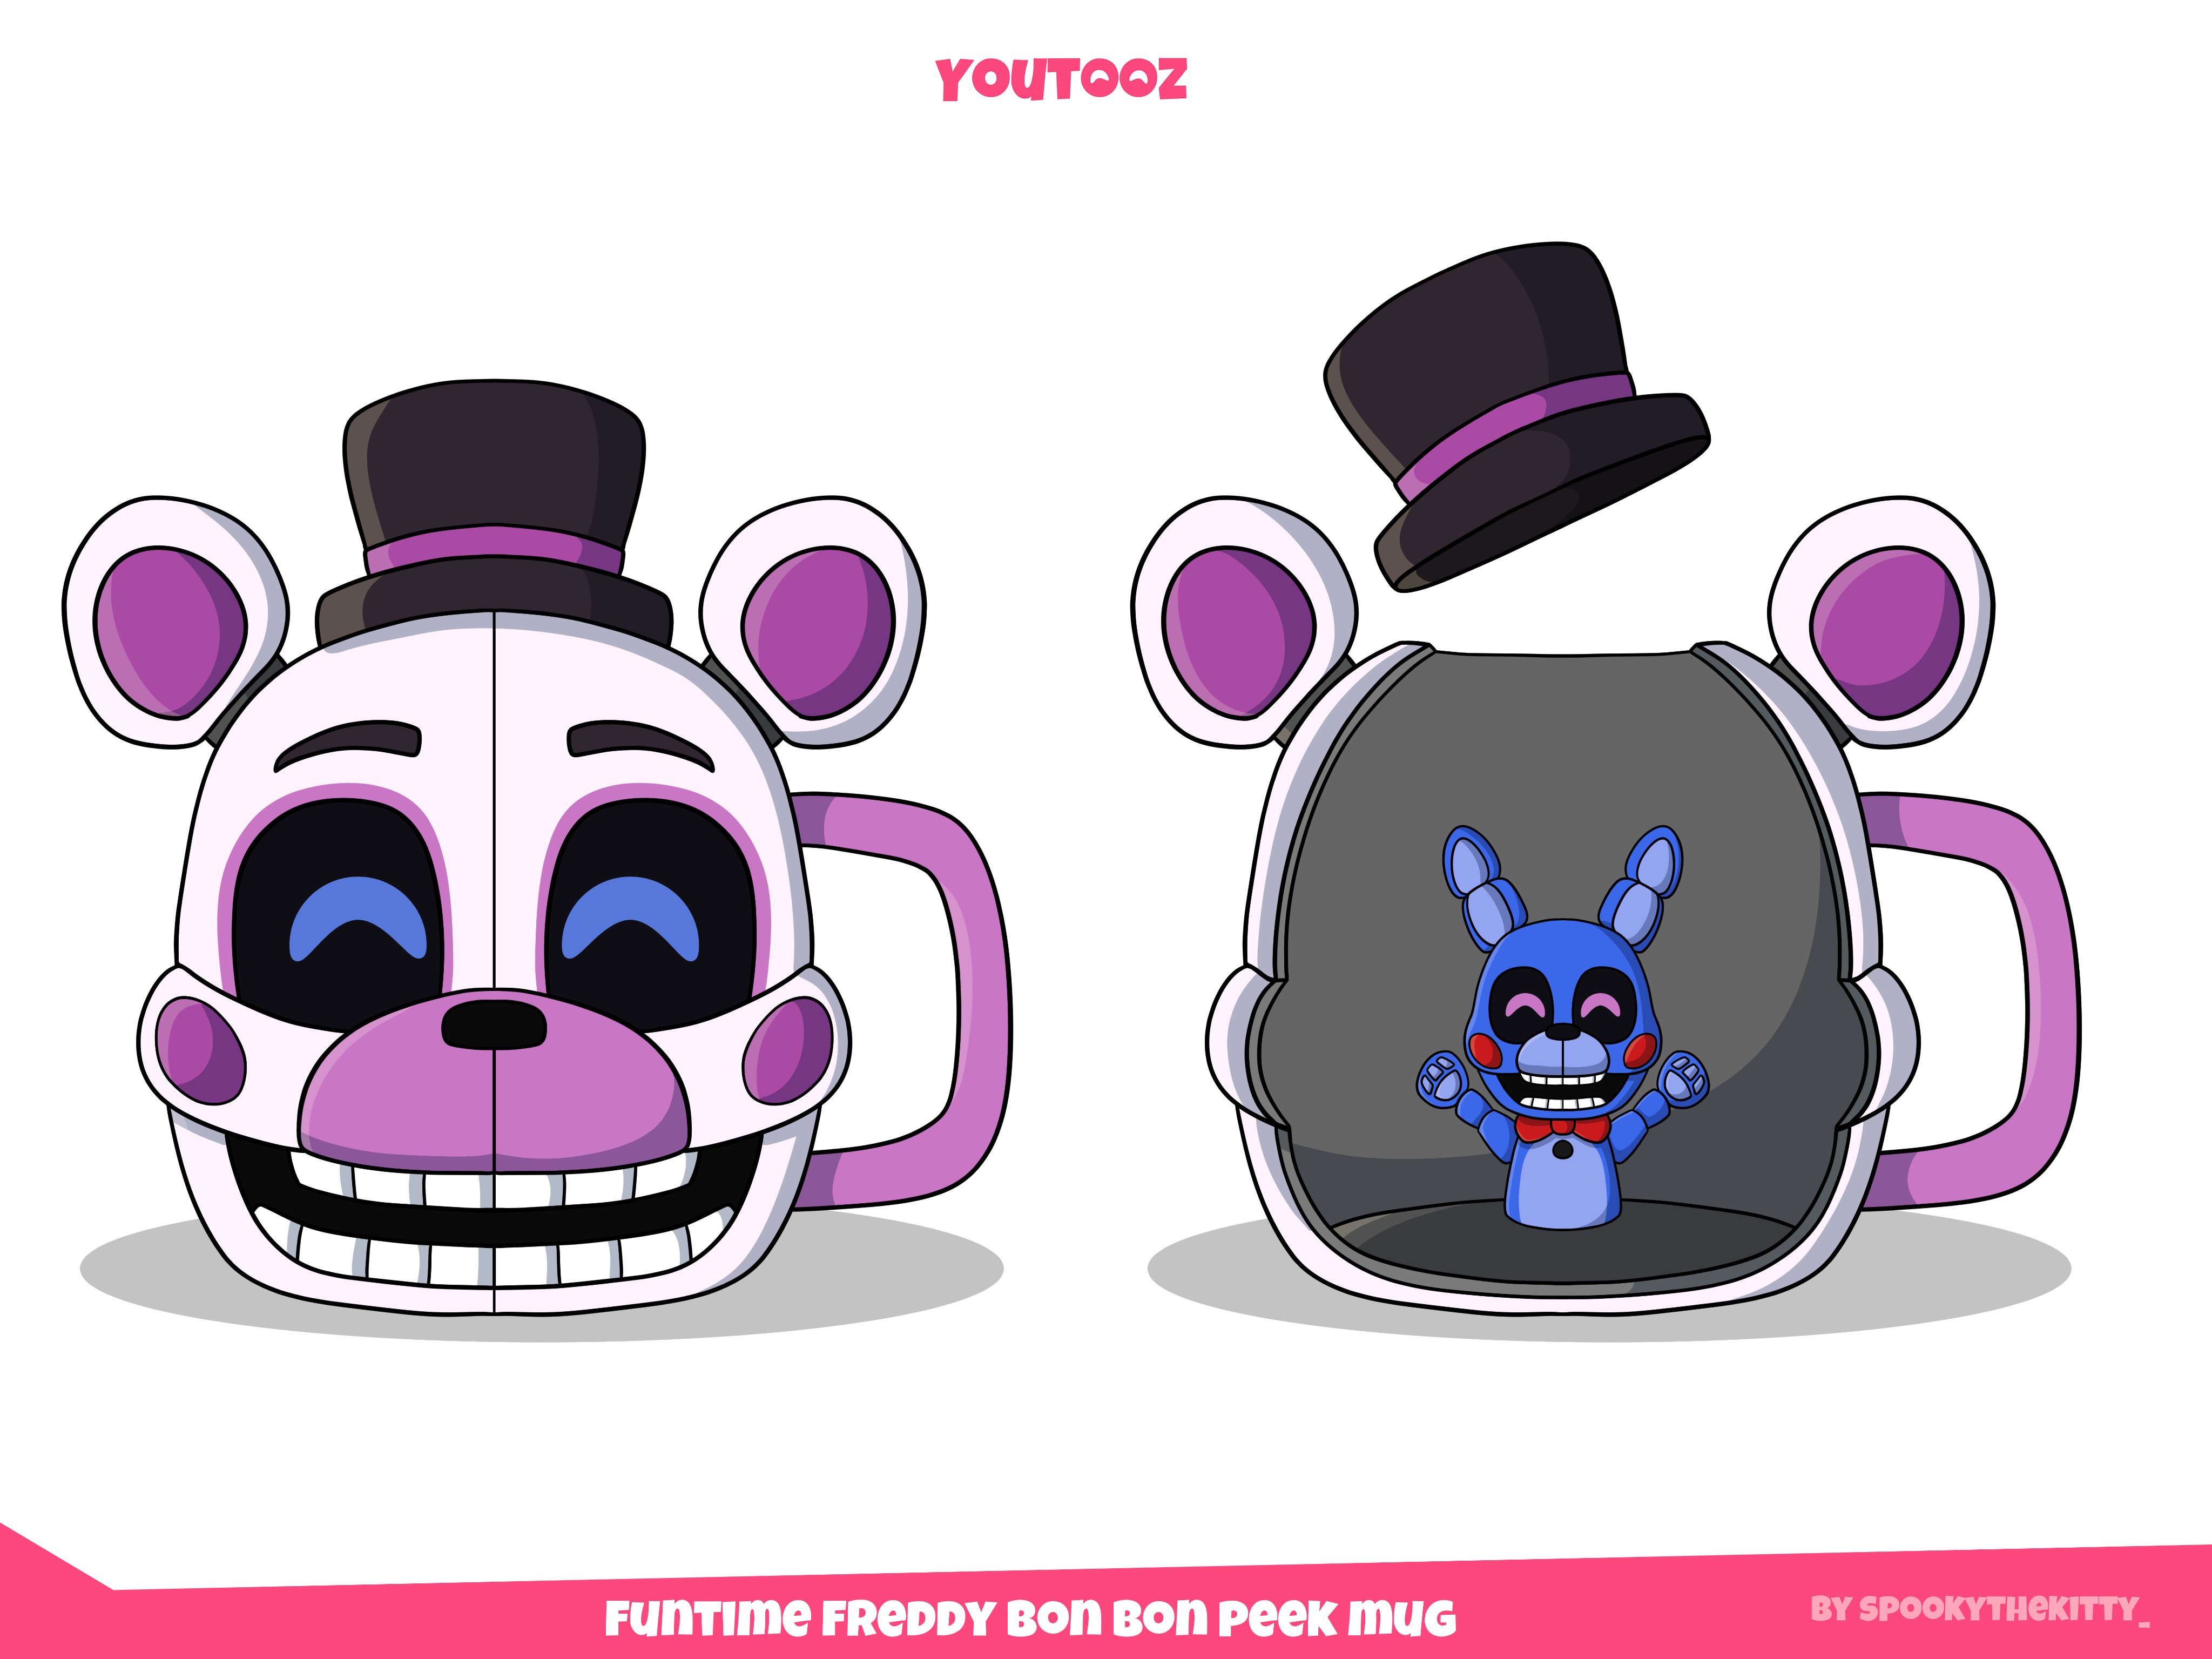 Made a youtooz styled Lolbit mug fan concept : r/fivenightsatfreddys